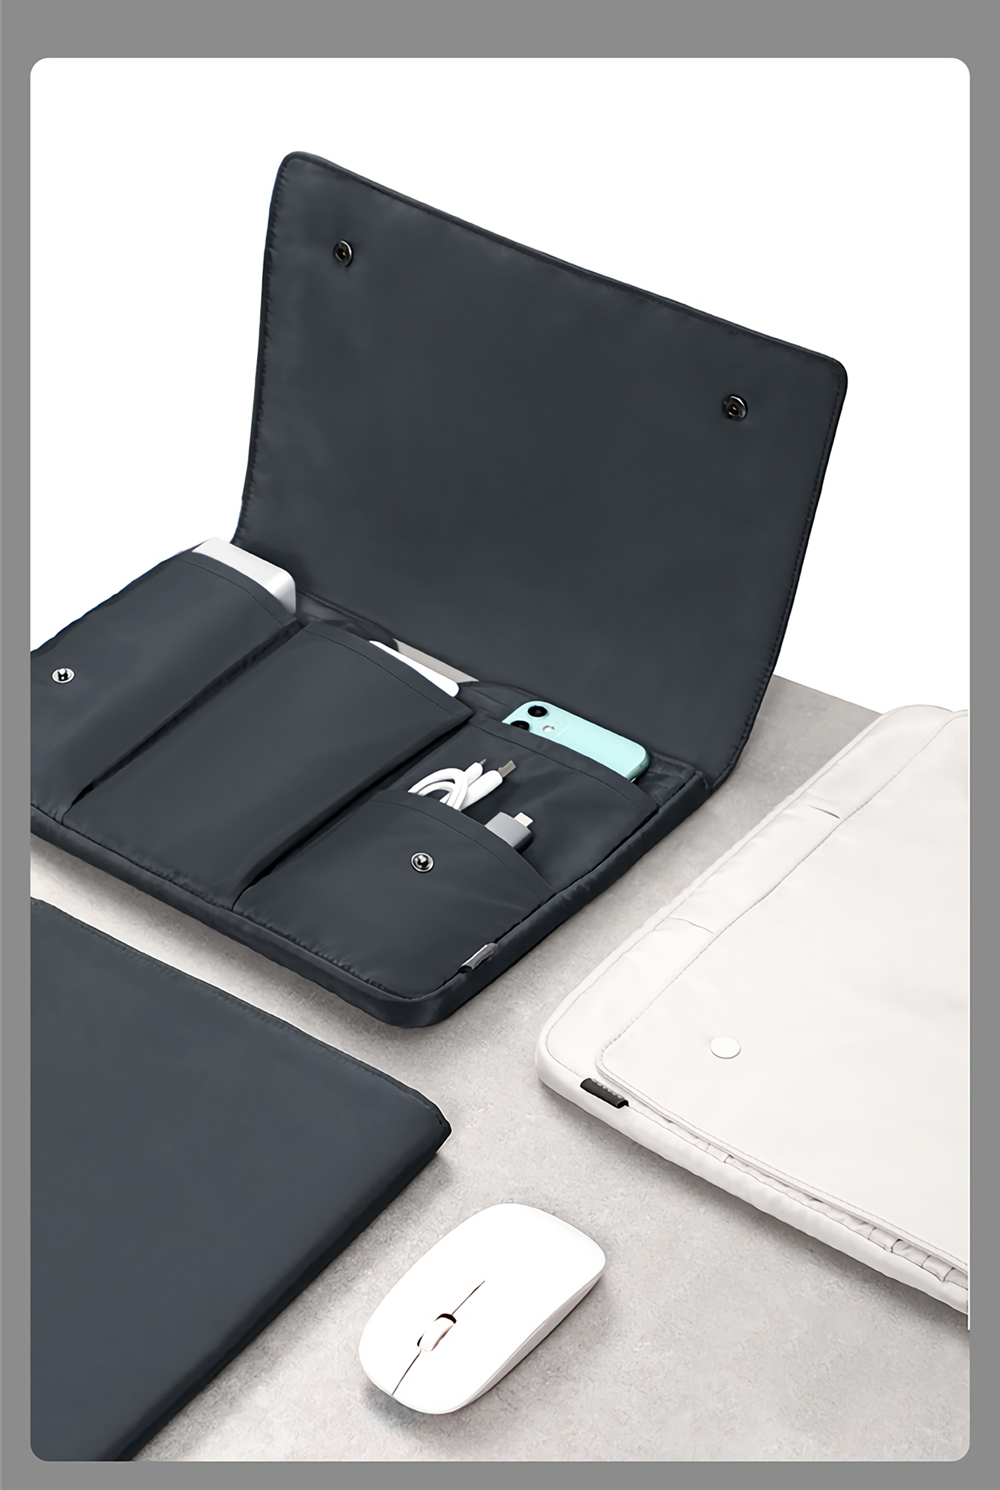 Baseus Laptop Bag Portable Waterproof Multi-functional Laptop Storage Bag Electronic Accessories Travel Organizer Bag Data Cable Organizer